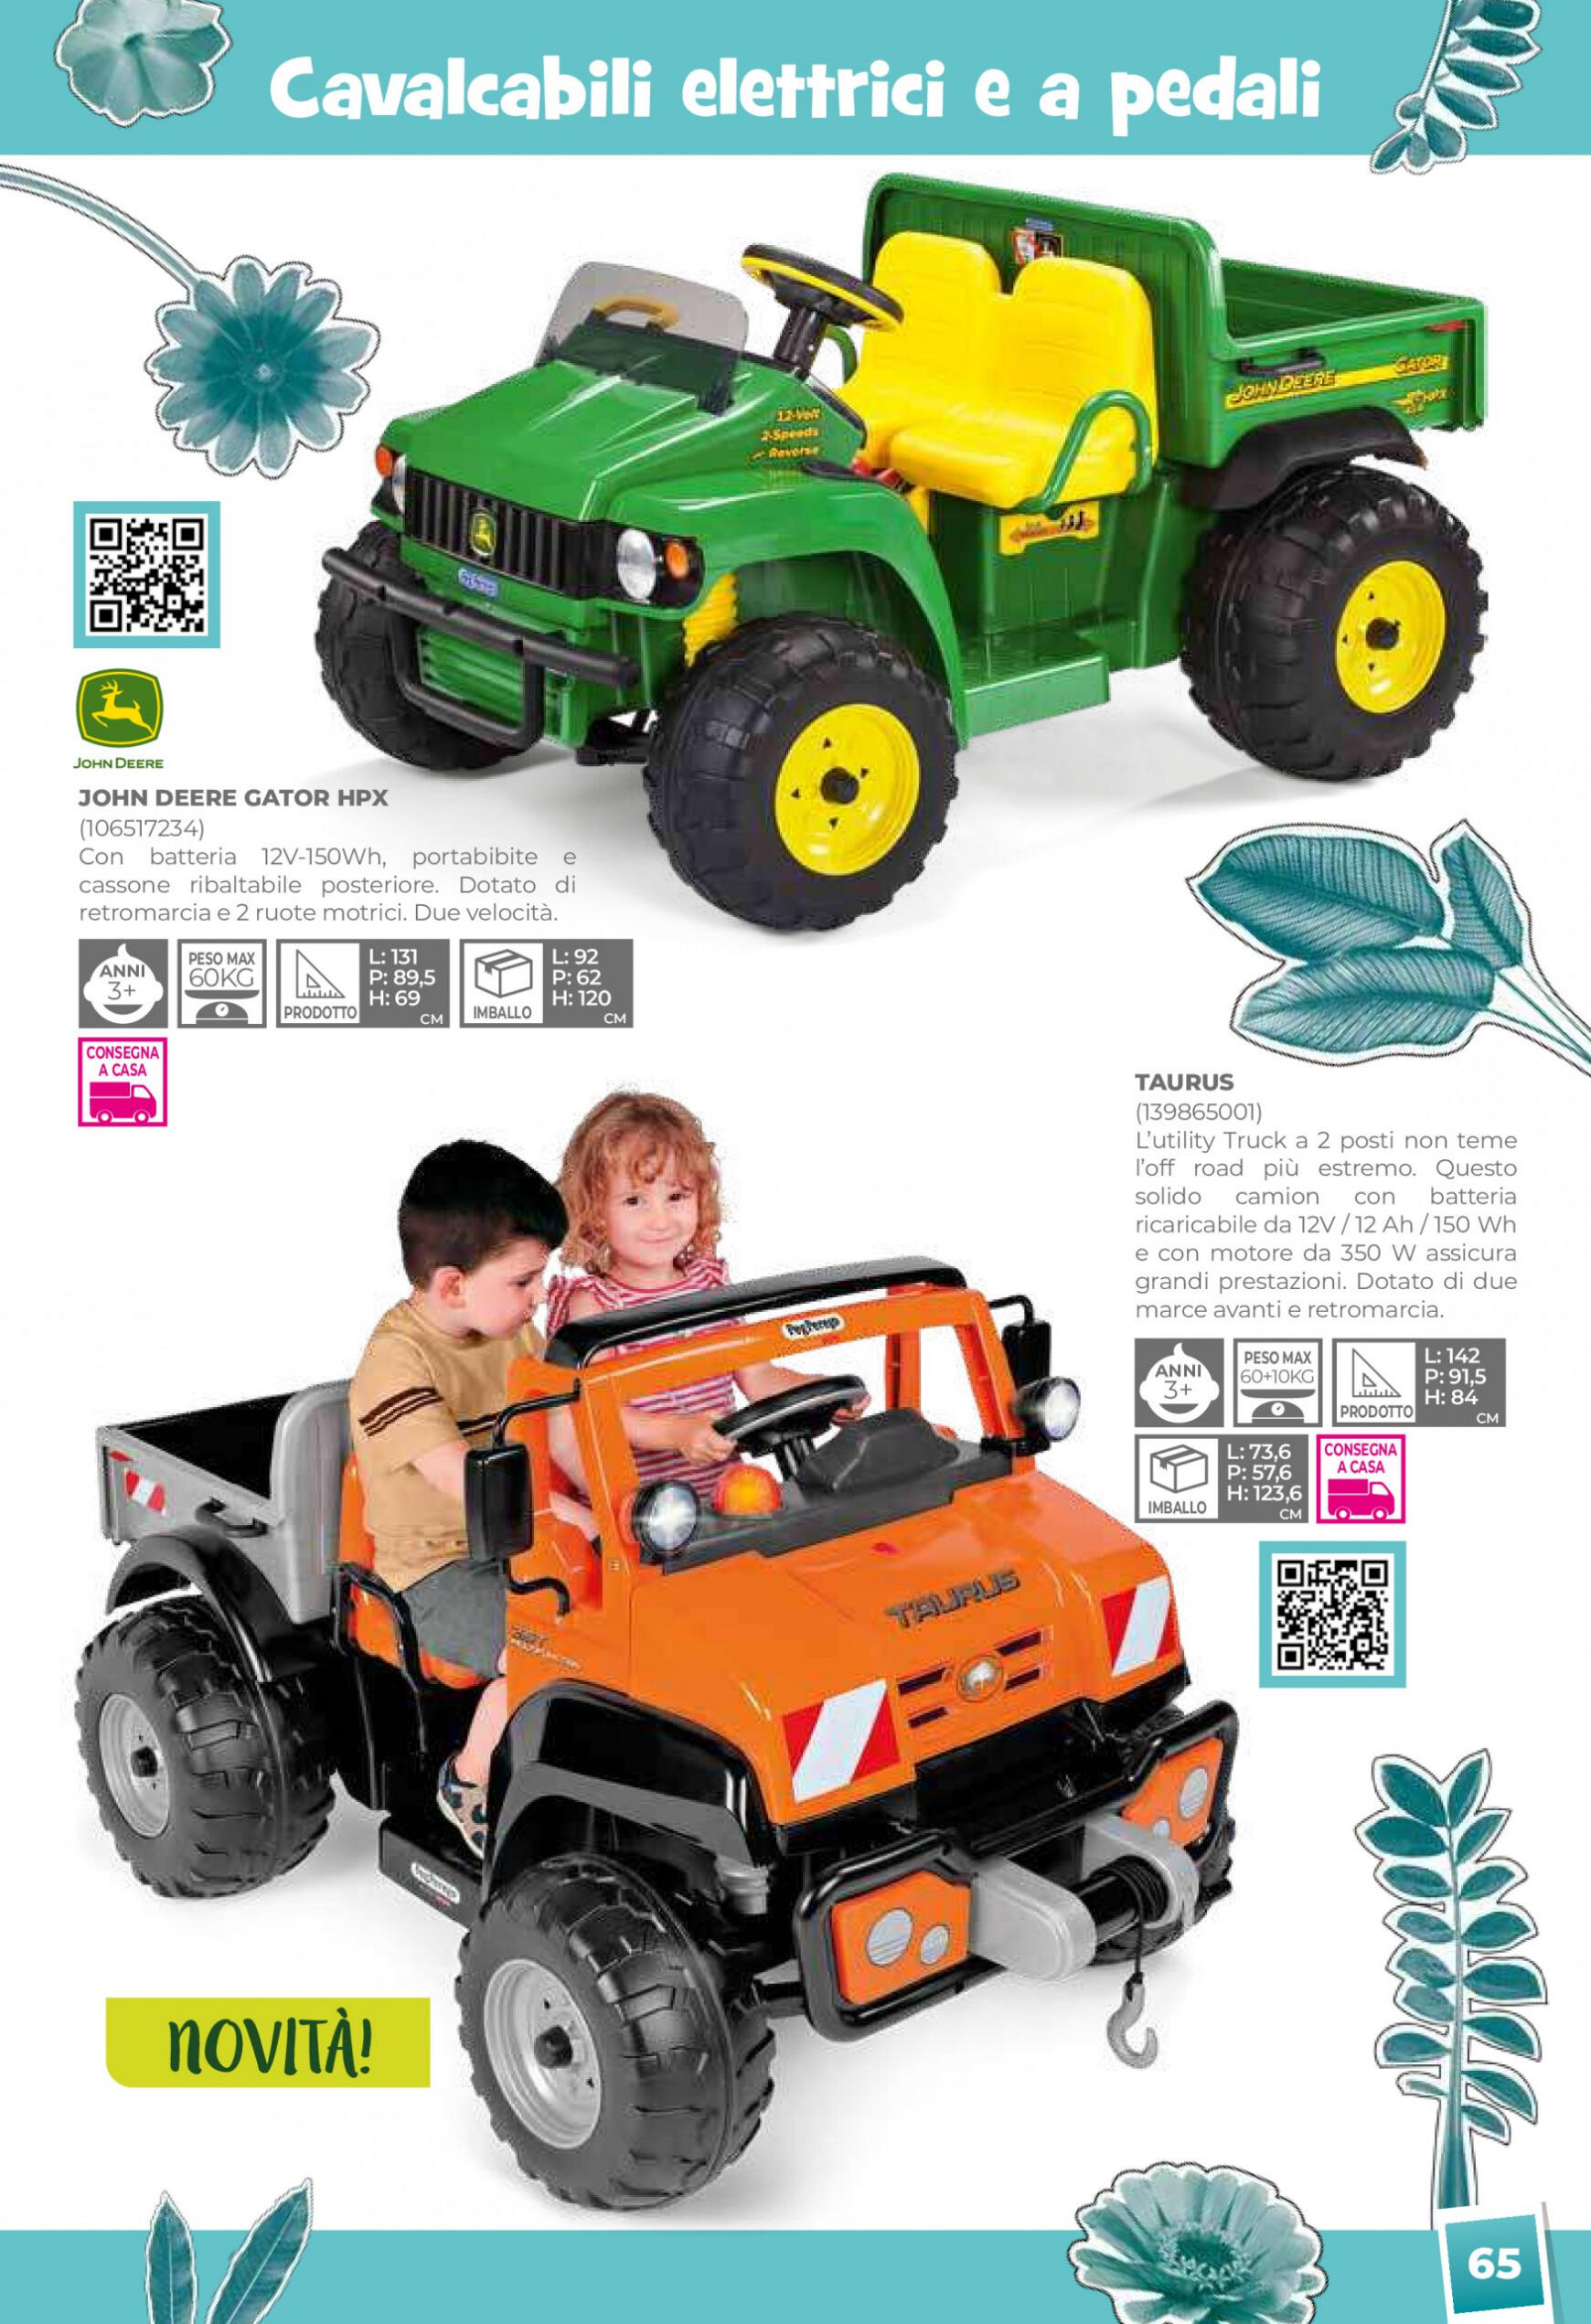 toys-center - Nuovo volantino Toys Center 01.05. - 31.12. - page: 67